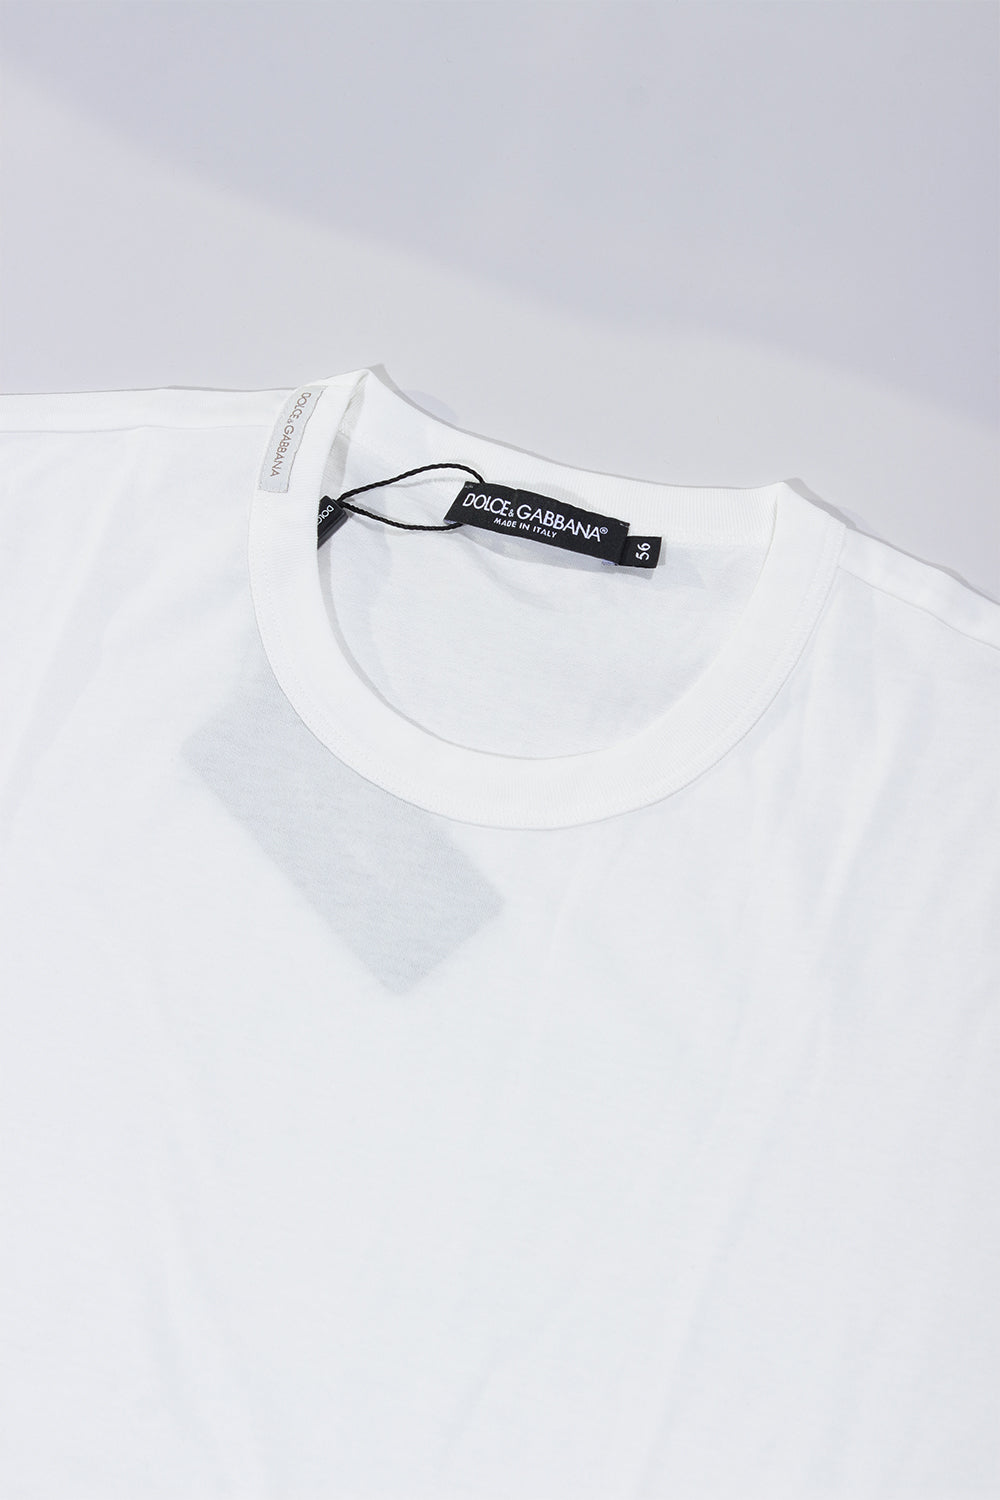 Dolce & Gabbana T-shirt neck logo tag white